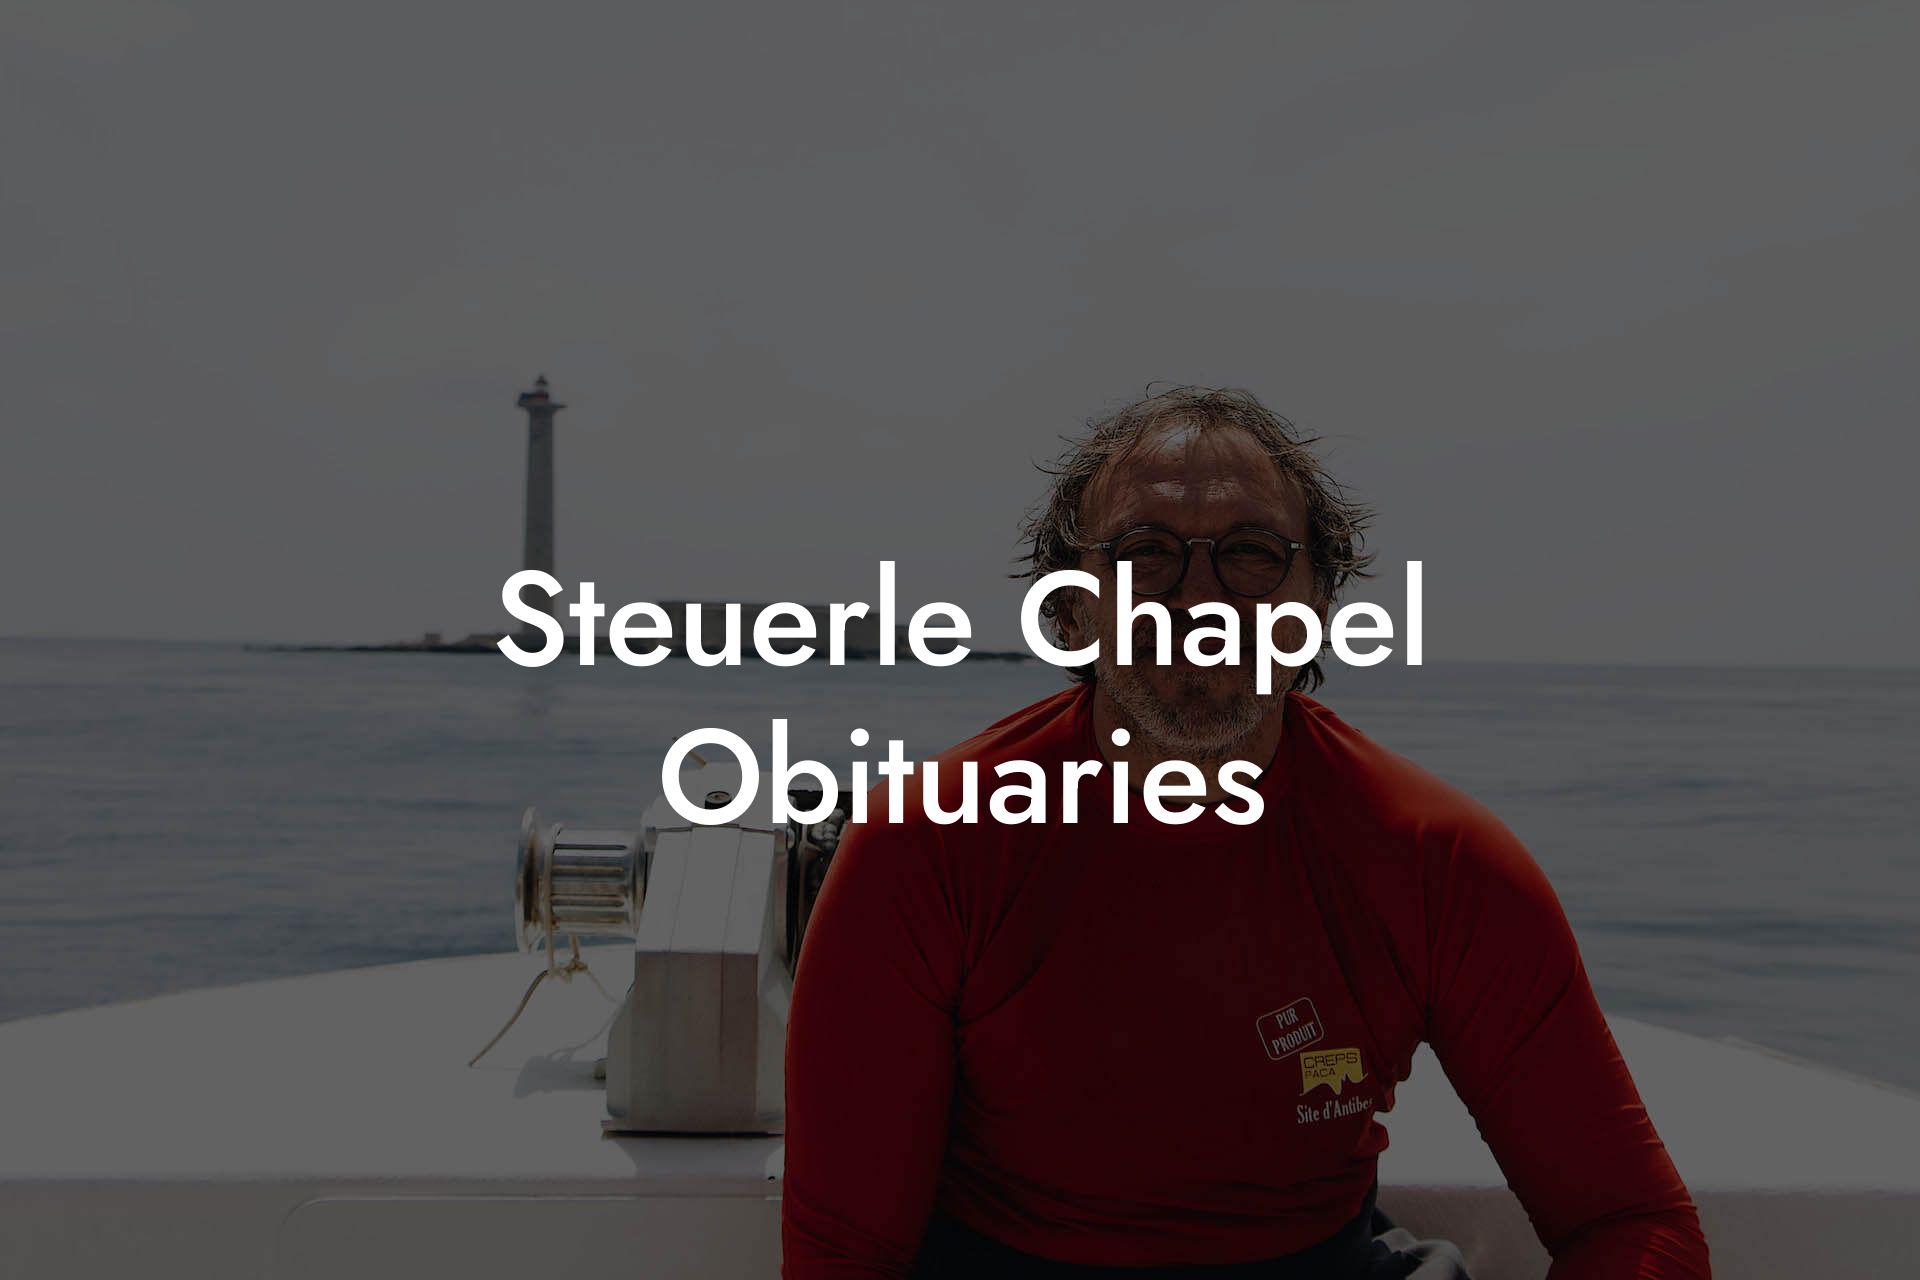 Steuerle Chapel Obituaries